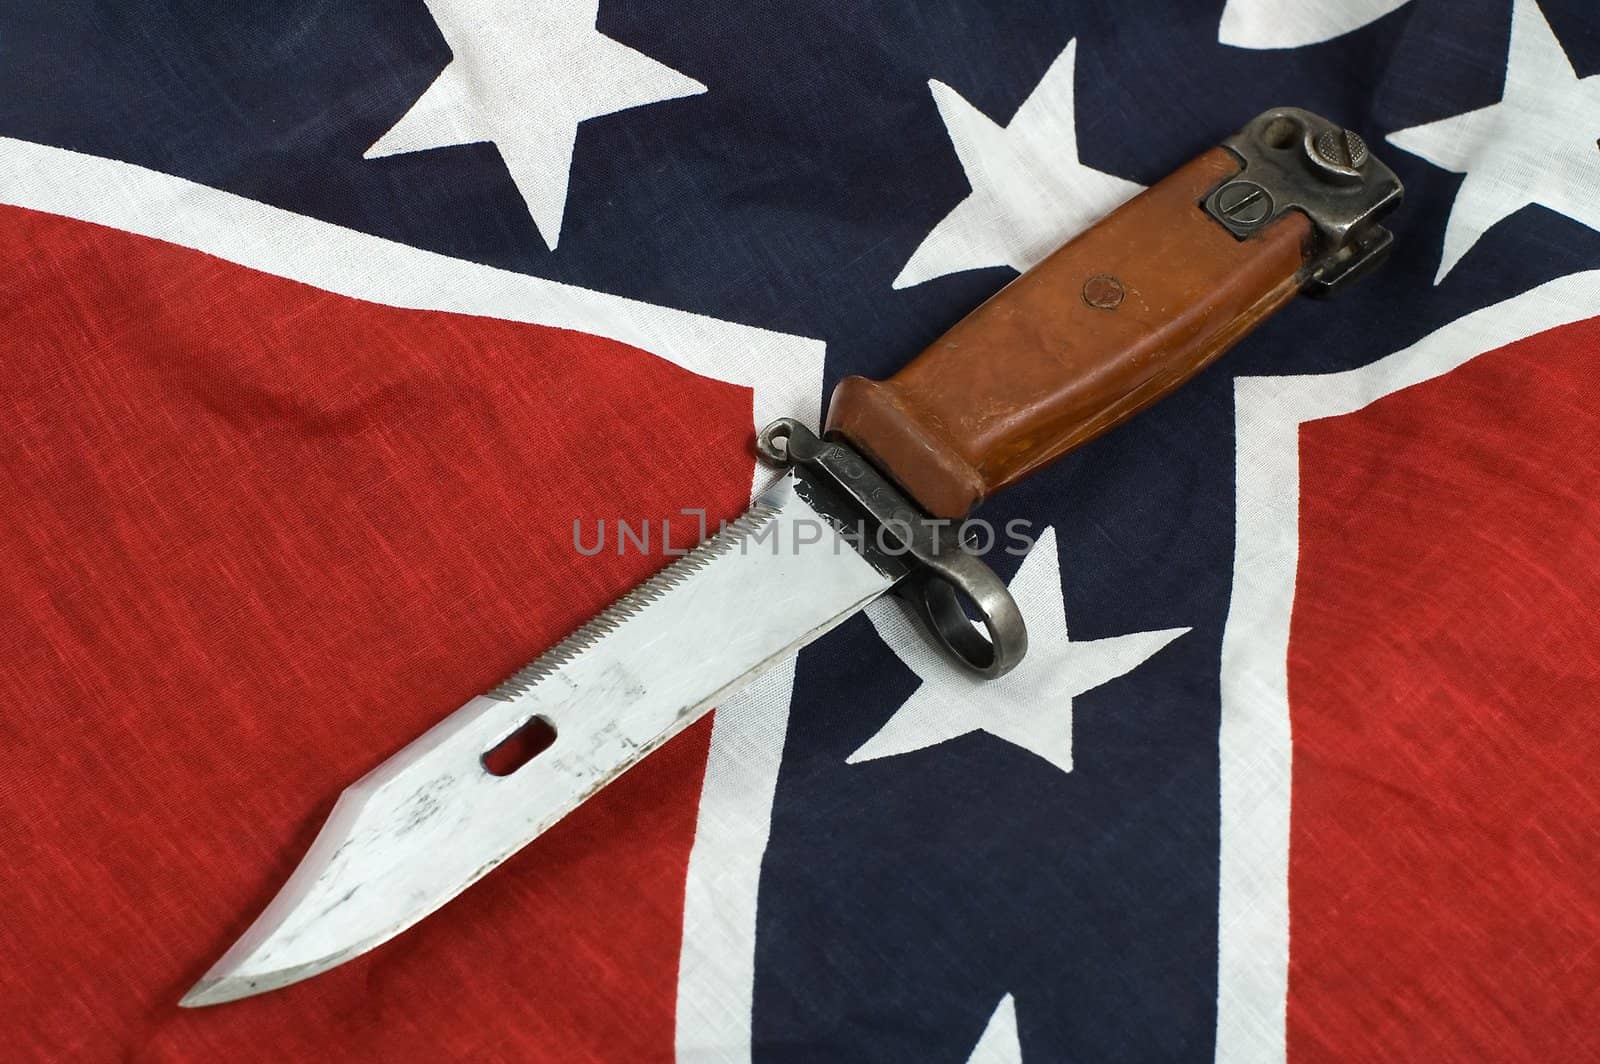 confederation knife by rorem